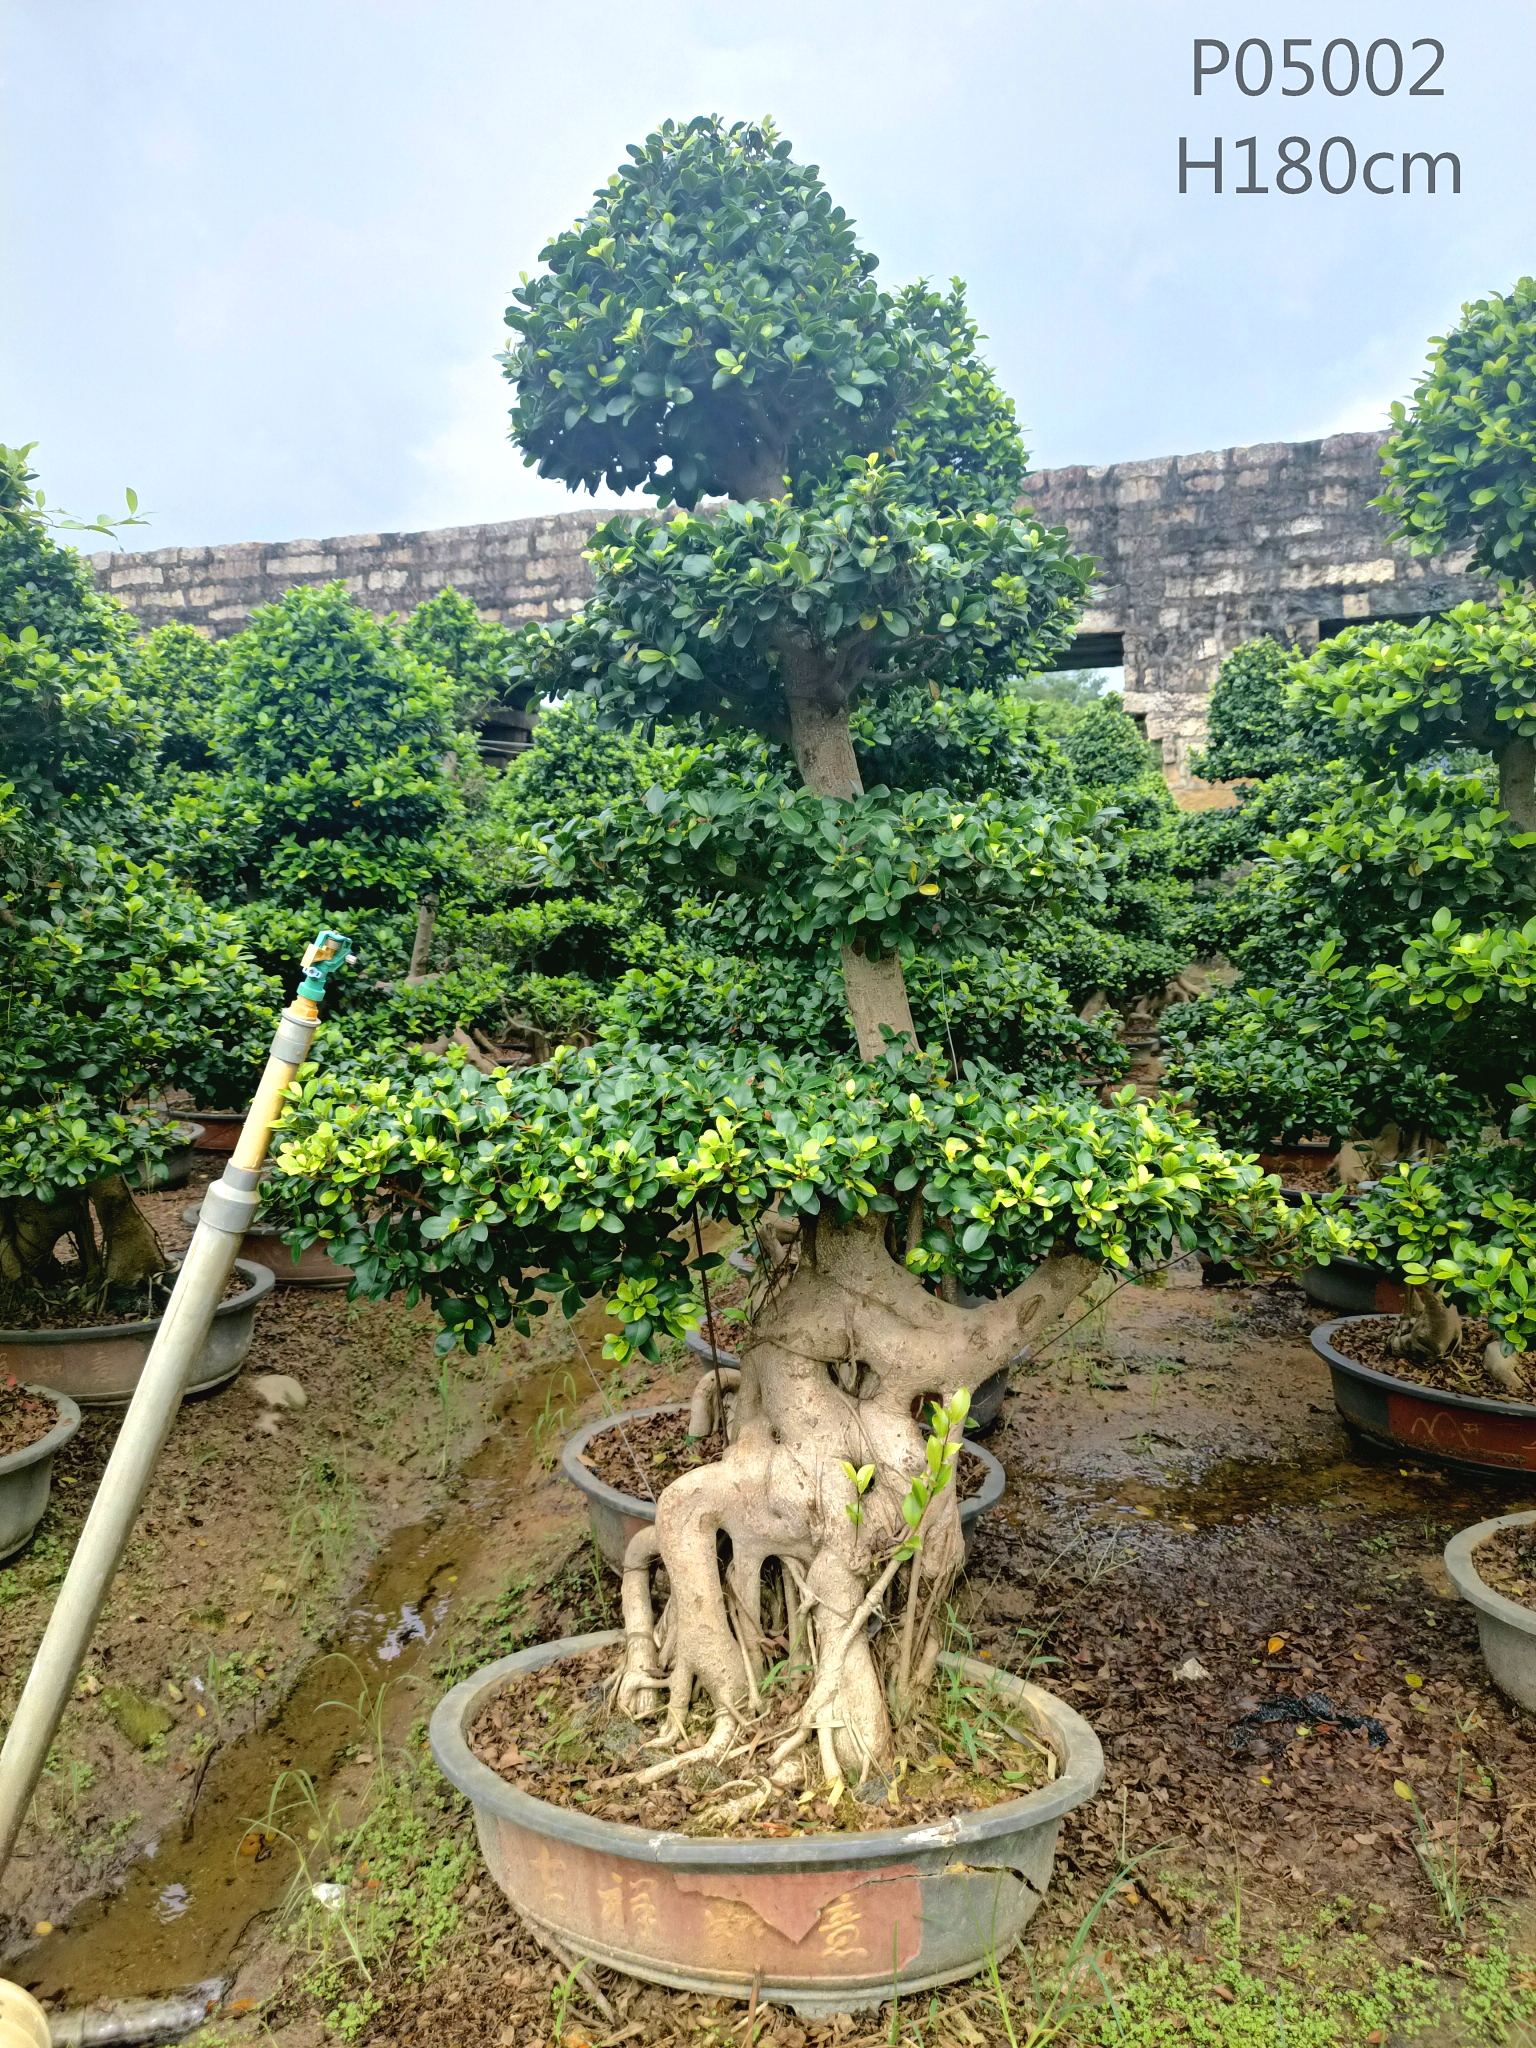 China Lieferant Ficus Shantou Wurzel Fiucs Microcarpa Schöner Ficus Bonsai mit 170-200 cm